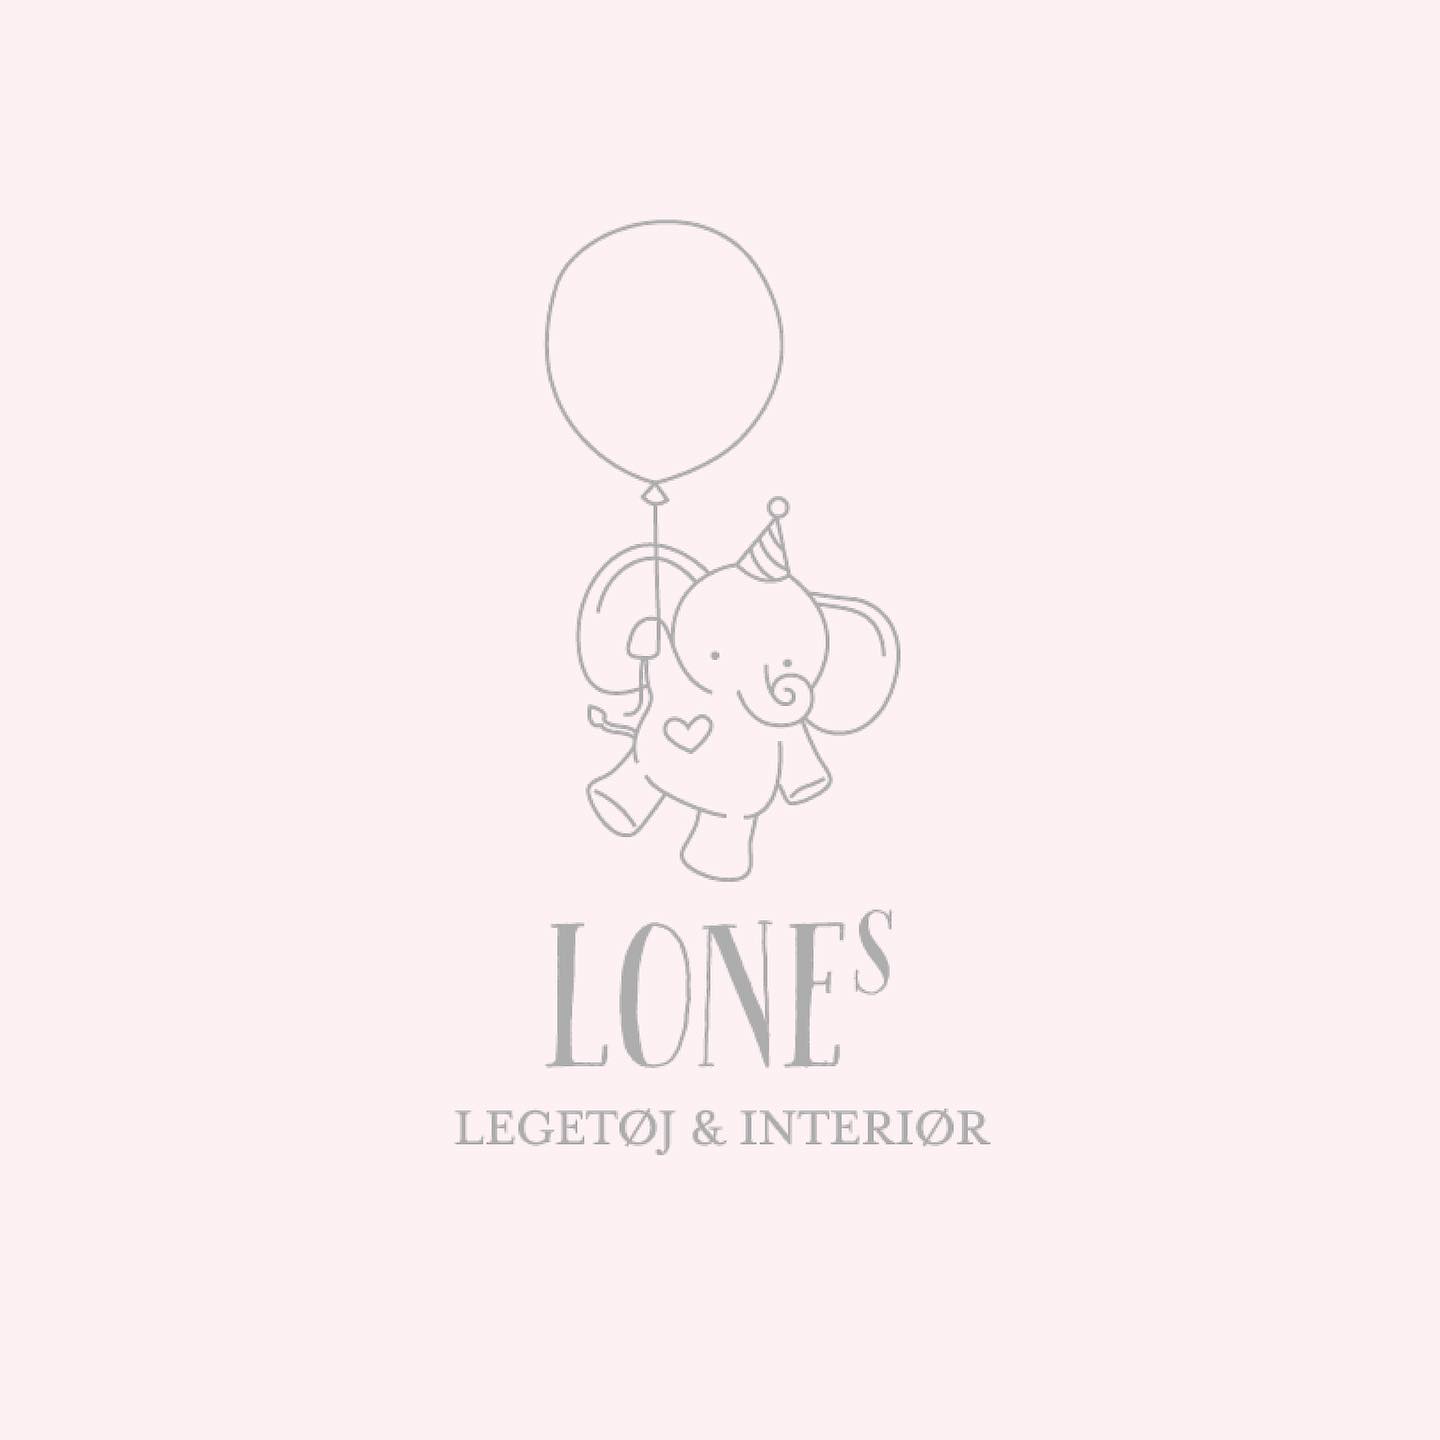 Logodesign Lones Legetøj